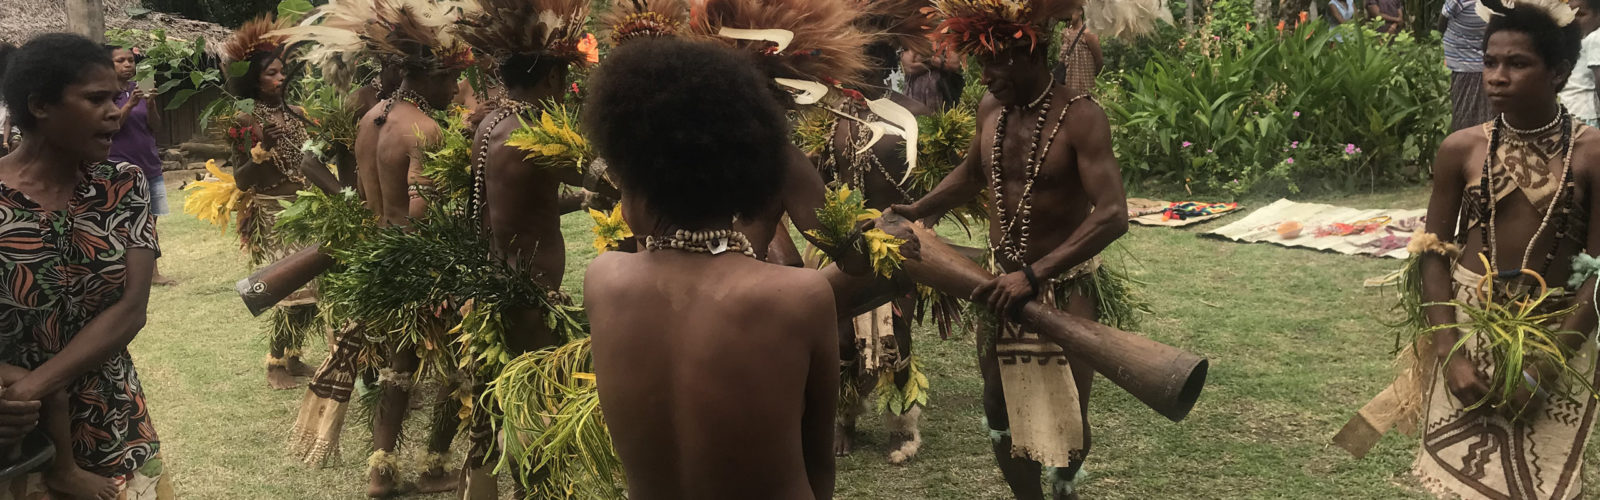 papua-new-guinea-tribe-dance